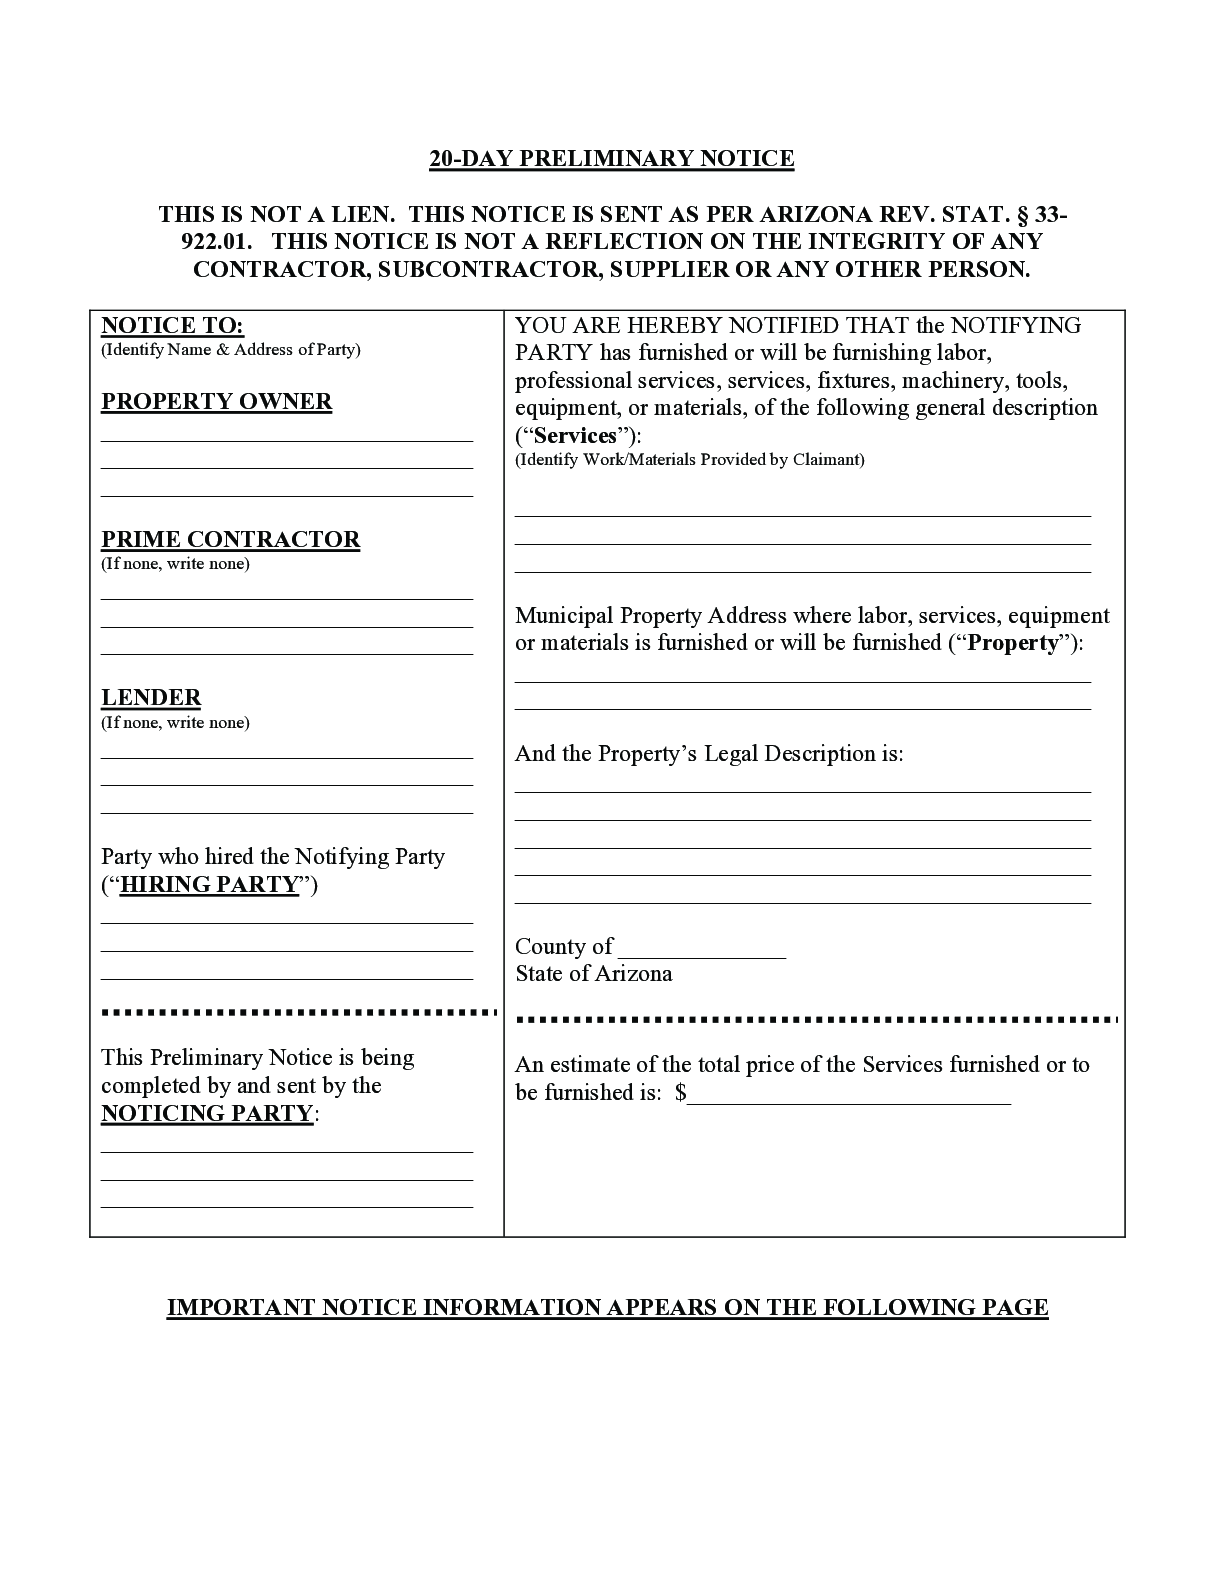 Arizona Preliminary 20-Day Notice Form - free from